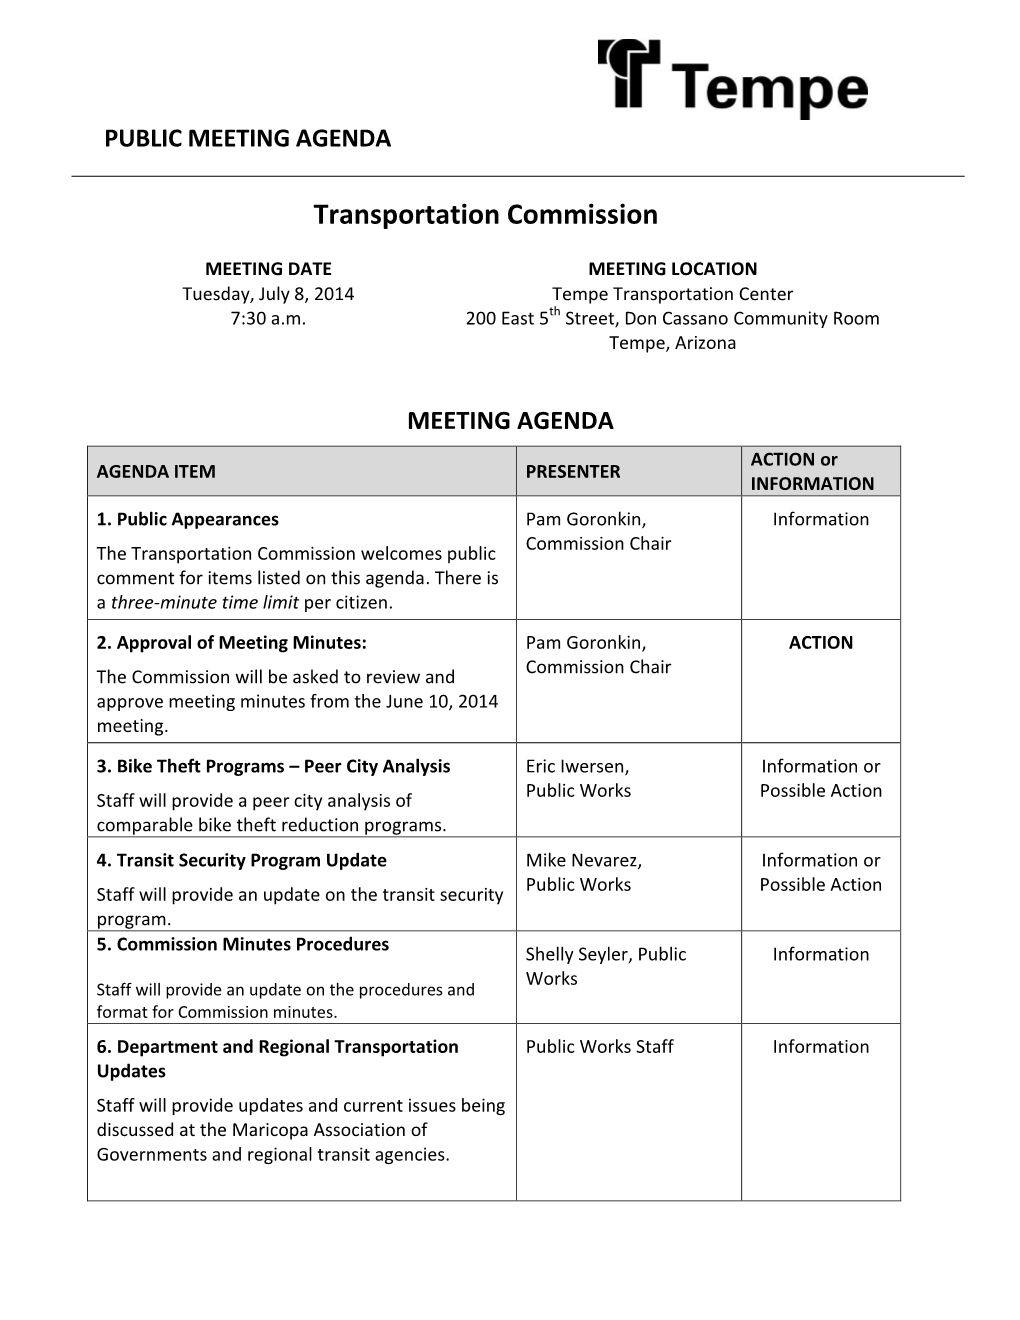 PUBLIC MEETING AGENDA Transportation Commission